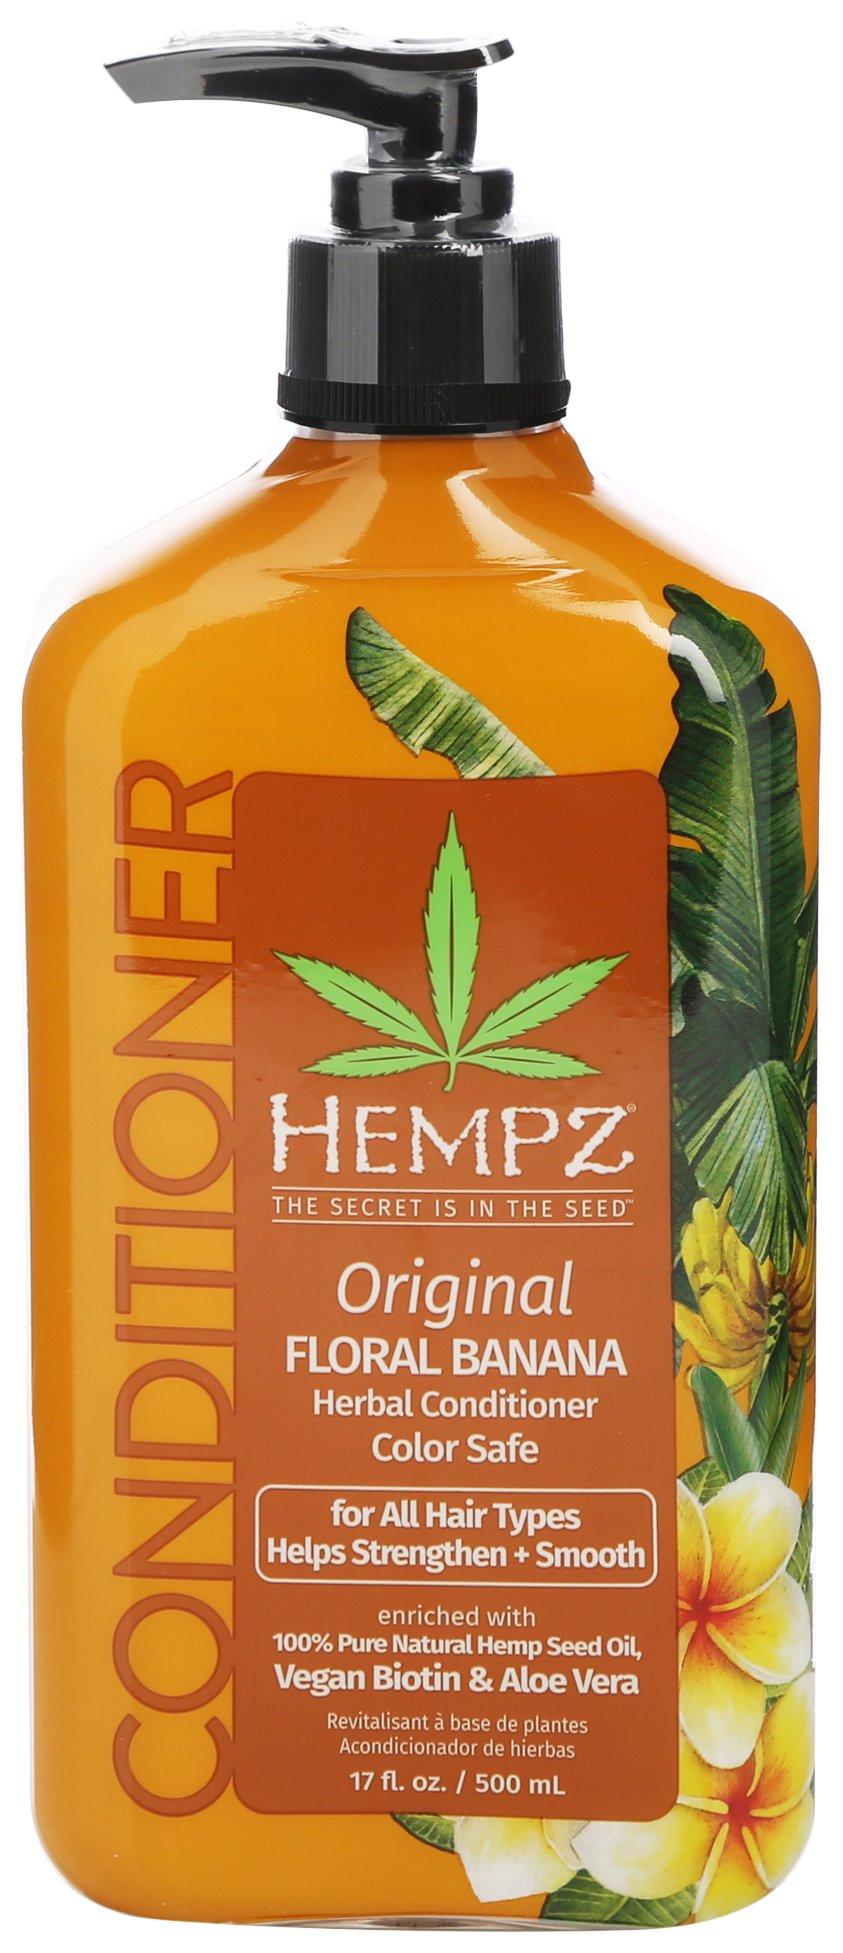 17 Fl.Oz. Original Floral Banana Herbal Conditioner